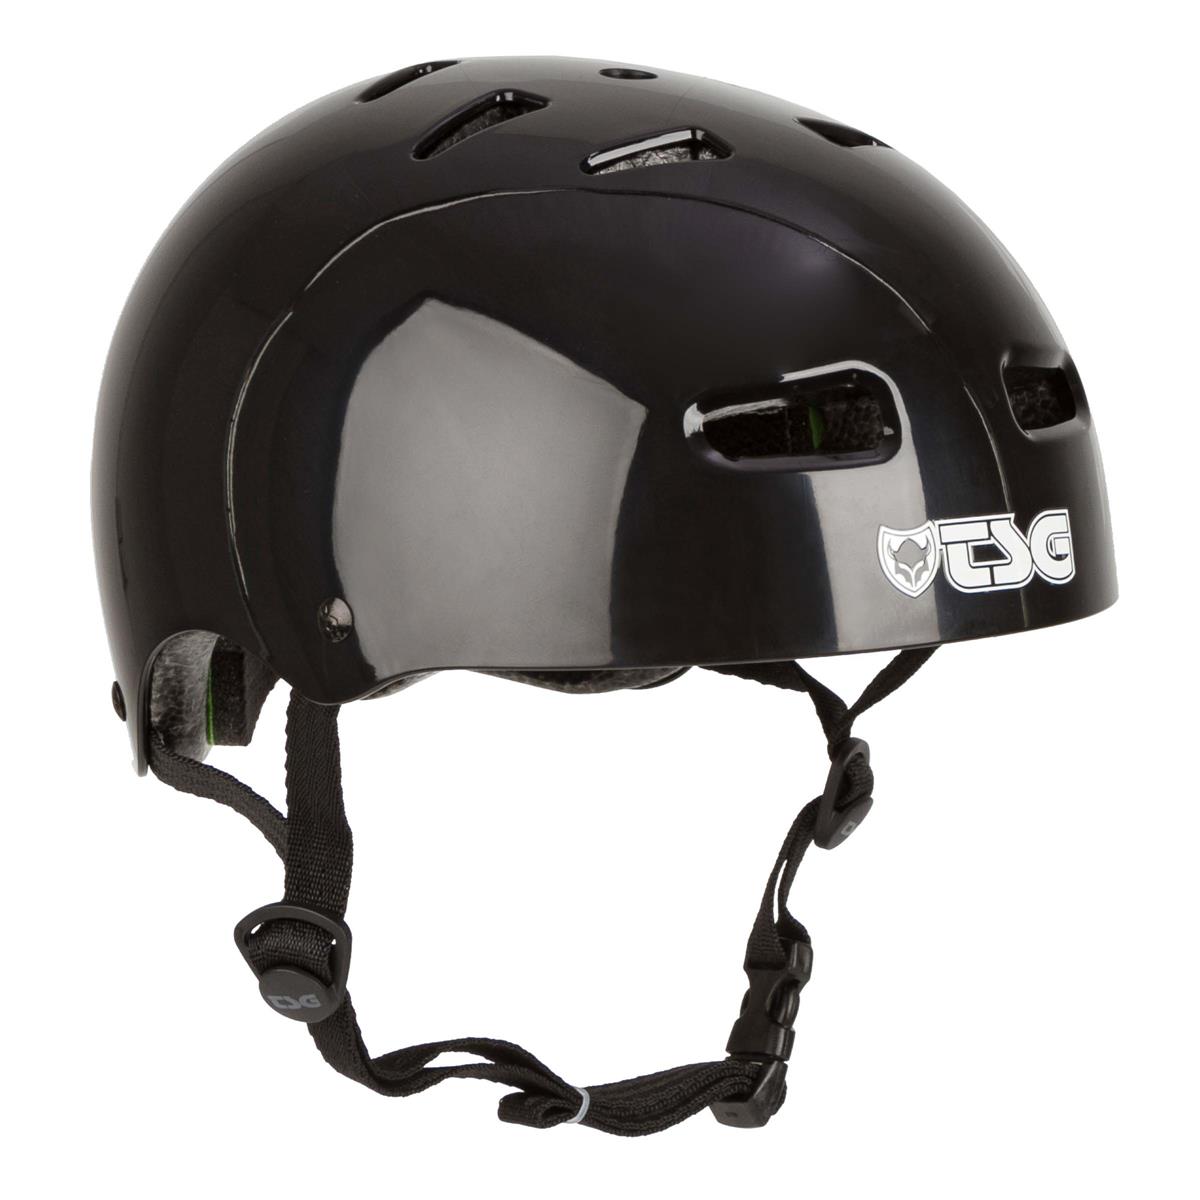 TSG Skate/Bmx Injected Black Helmet Couleur Noir Taille S/M